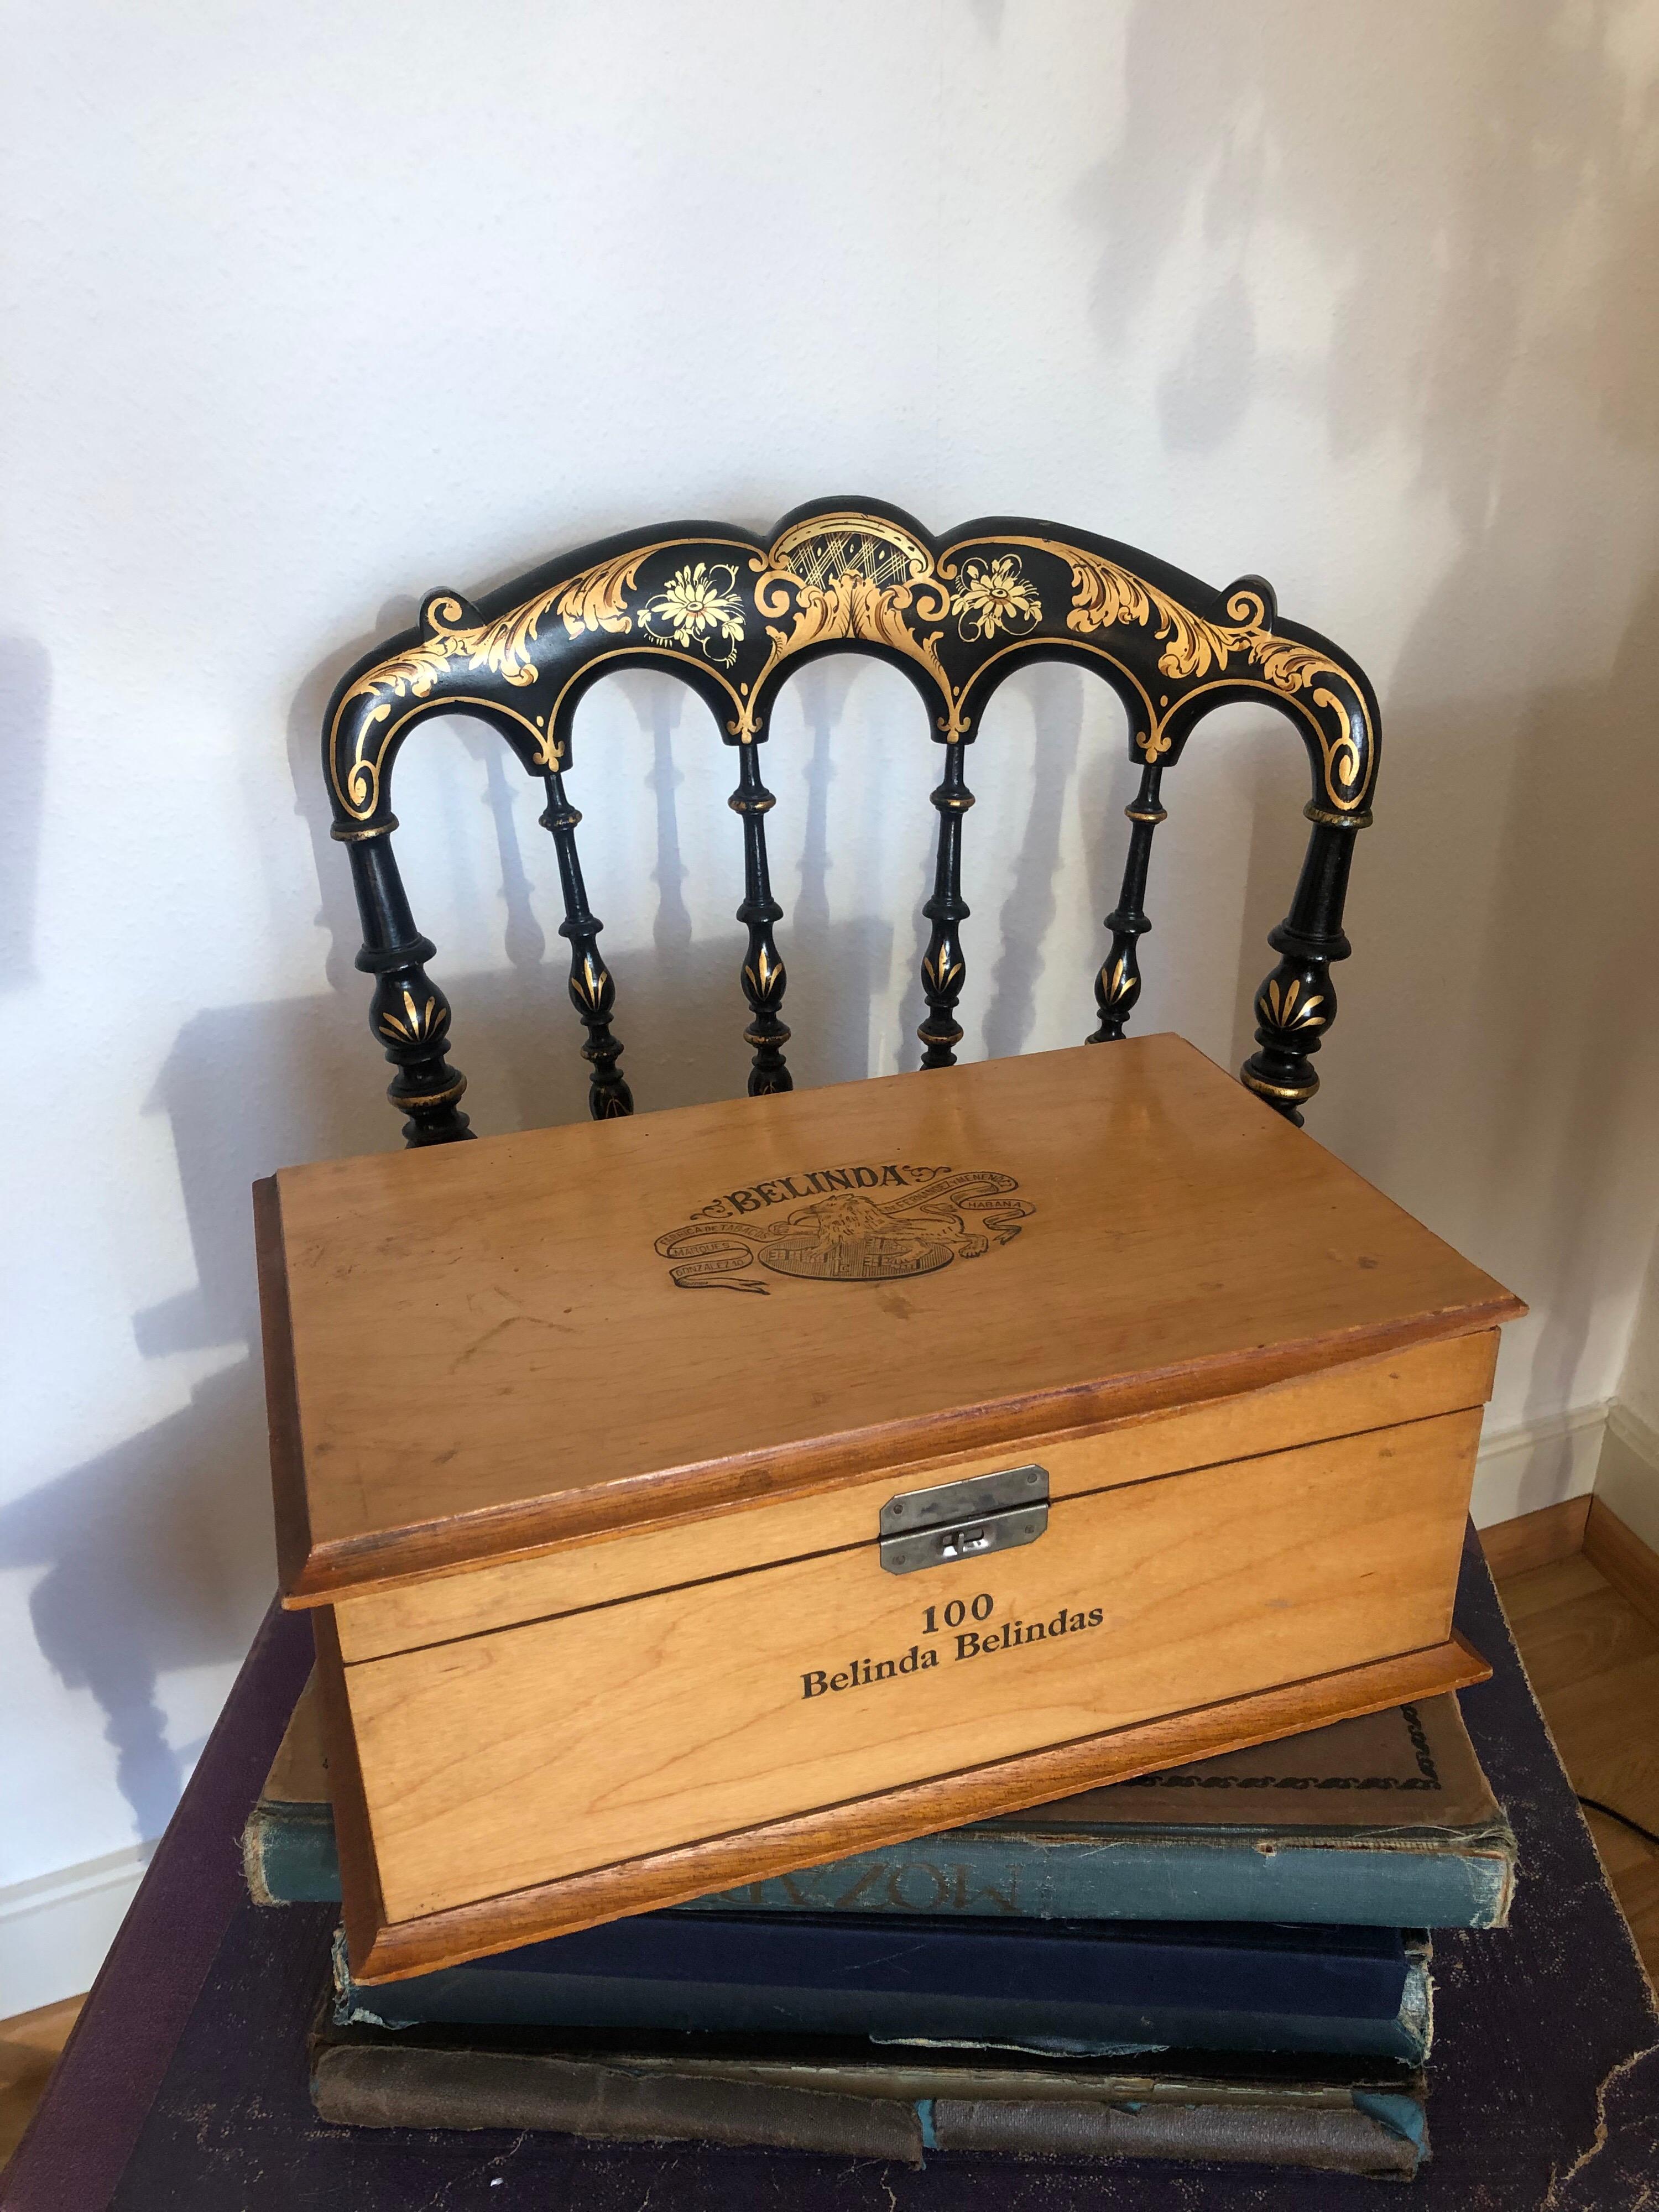 Belinda 100 Wooden Authentic Box, British American Tobacco, 1980s 4